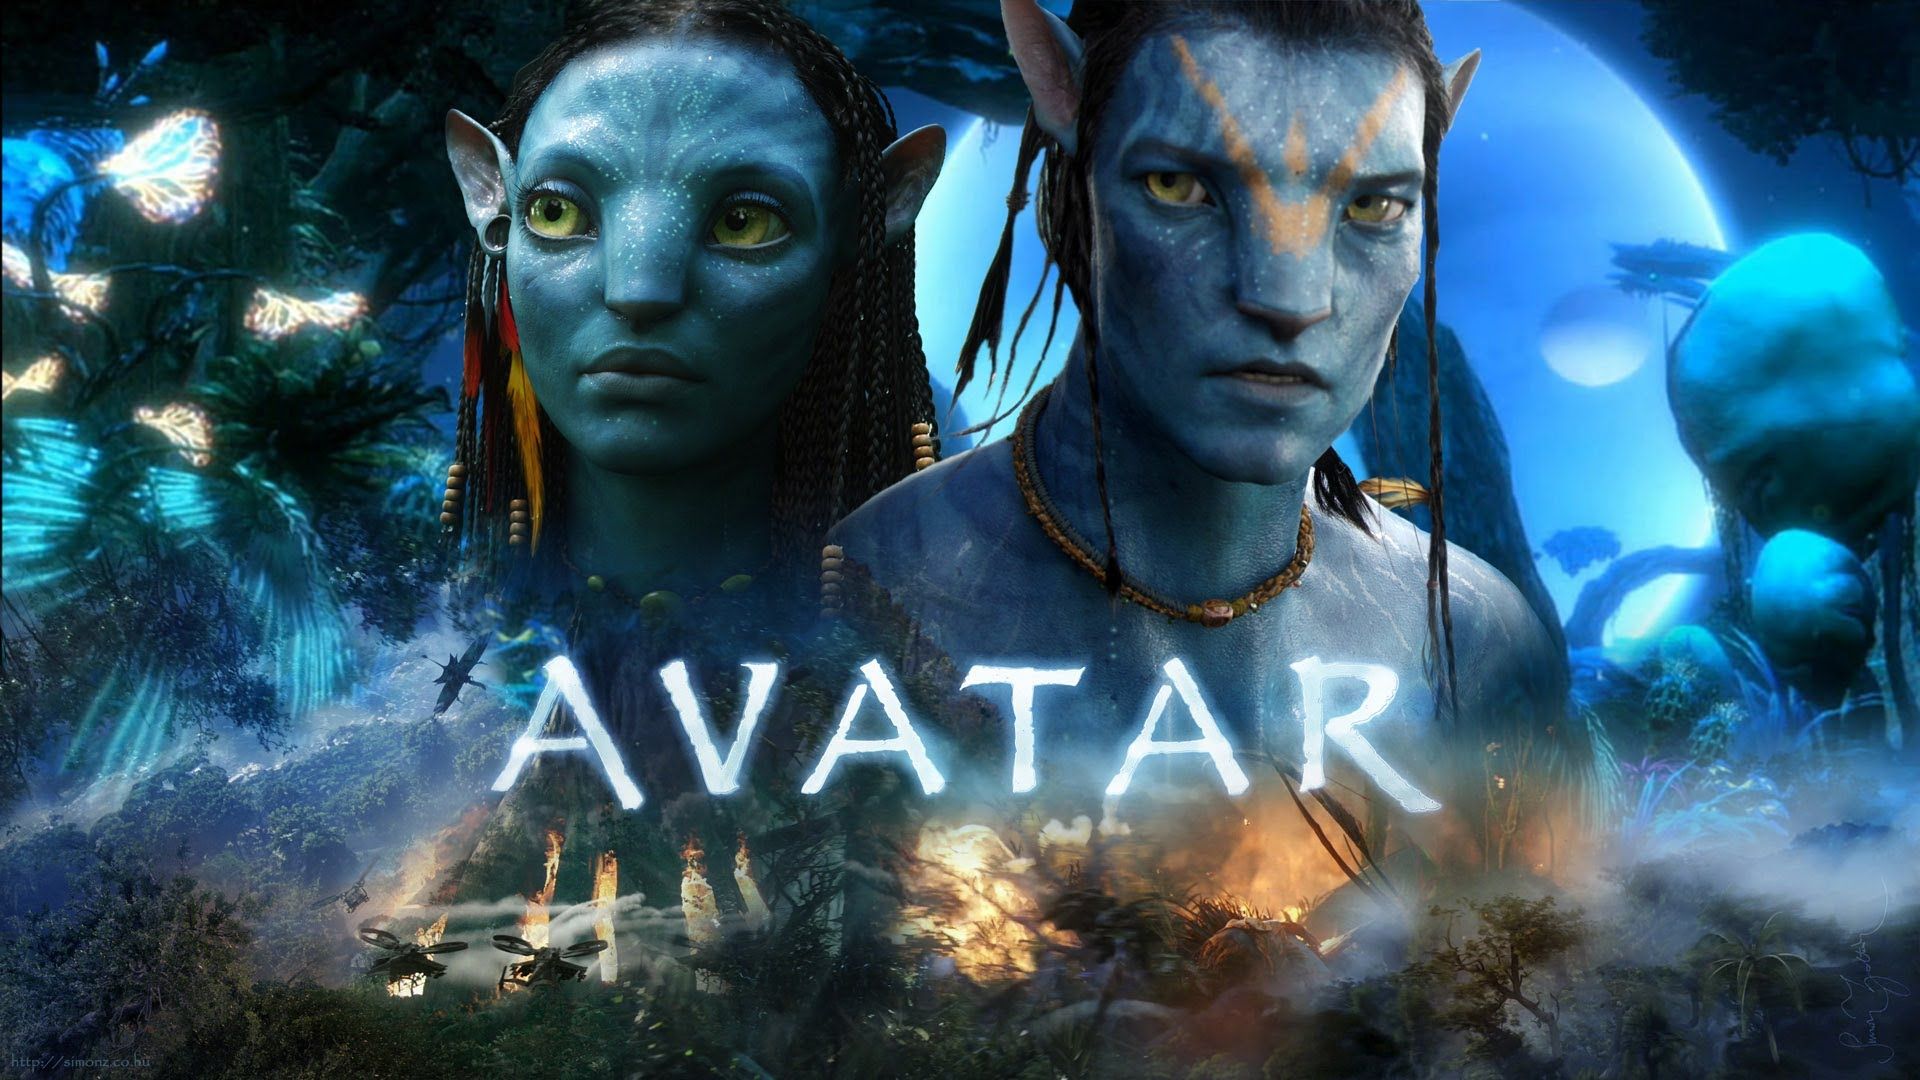 Avatar: Pandora passengers, get ready to take off